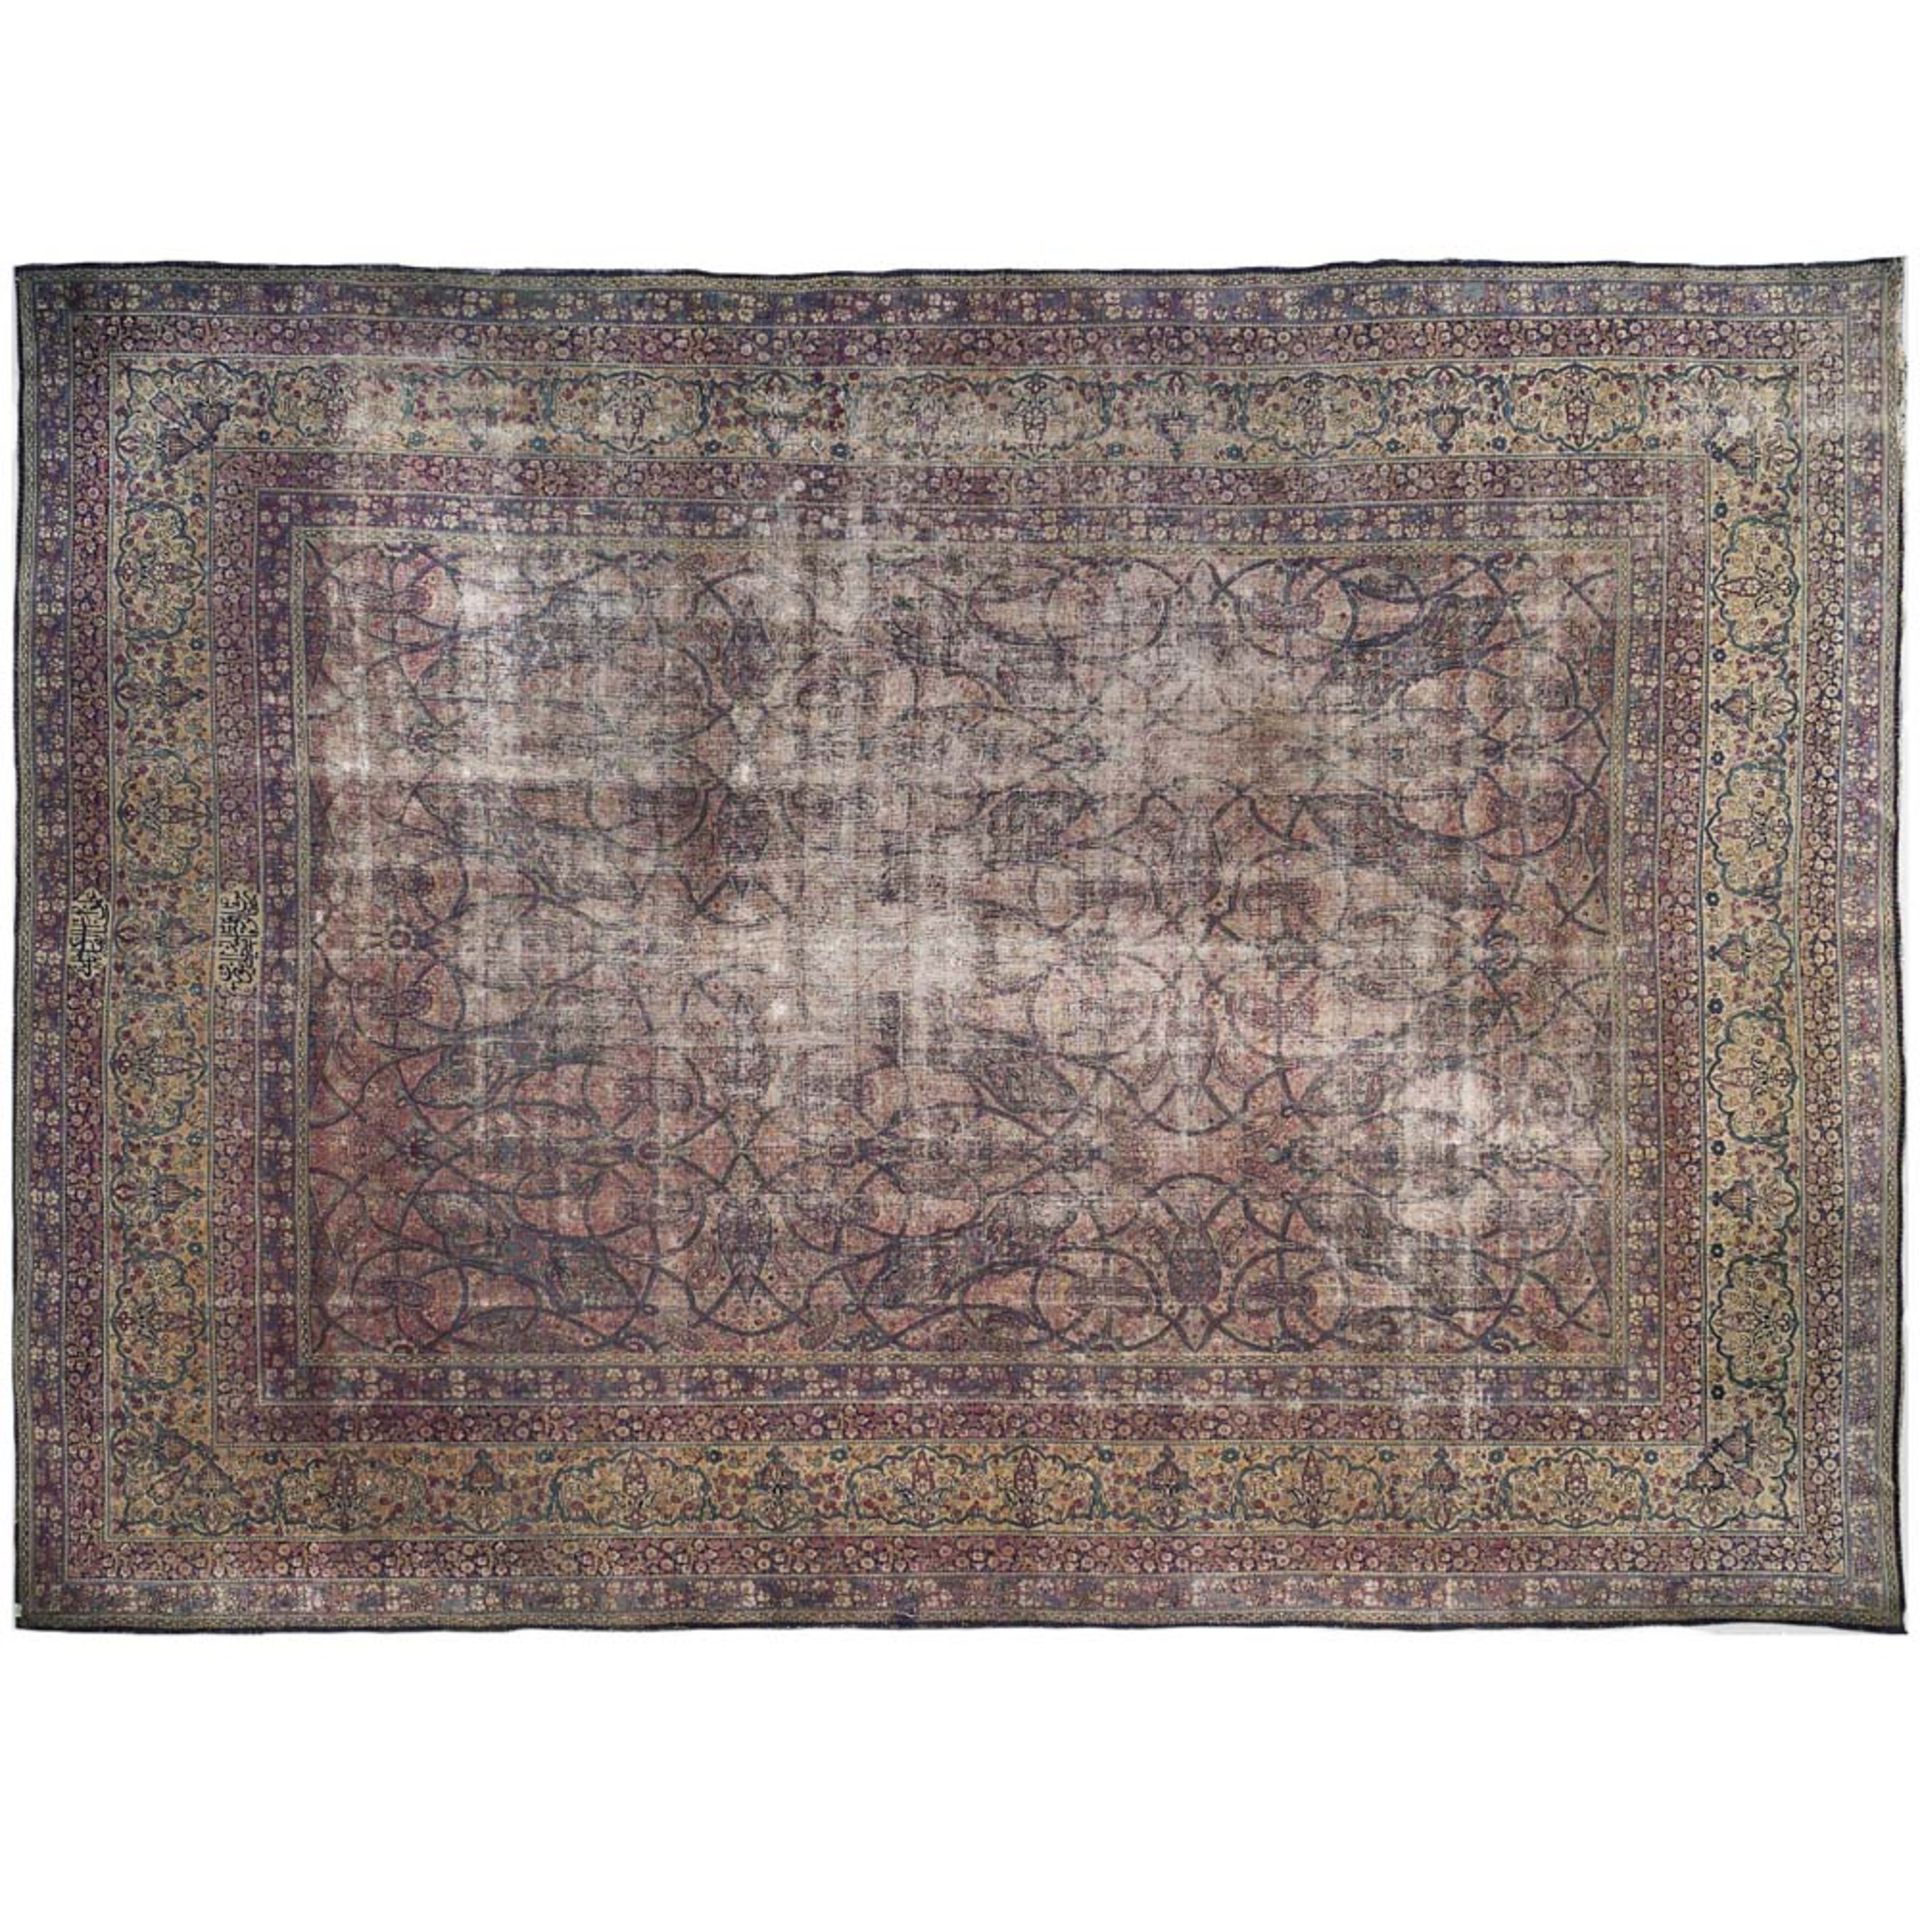 Kirman Lavel carpet Persia, 19th century 410x270 cm.